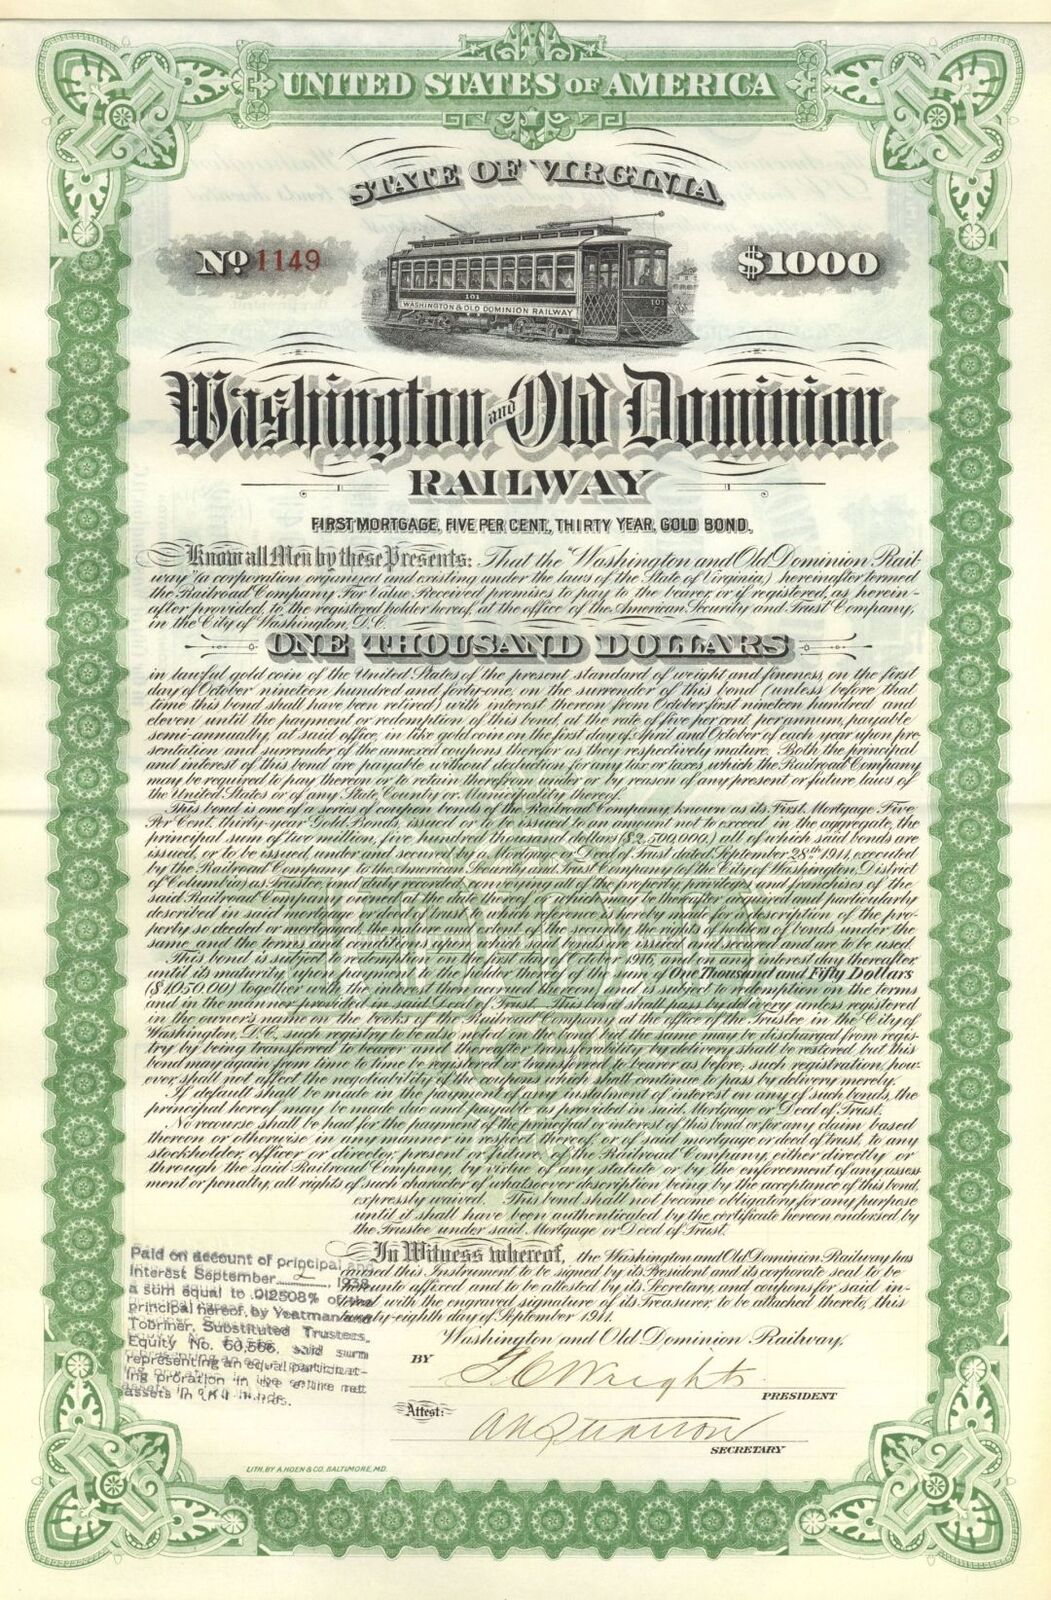 Washington and Old Dominion Railway - 1911 dated $1,000 Uncanceled Railroad Gold